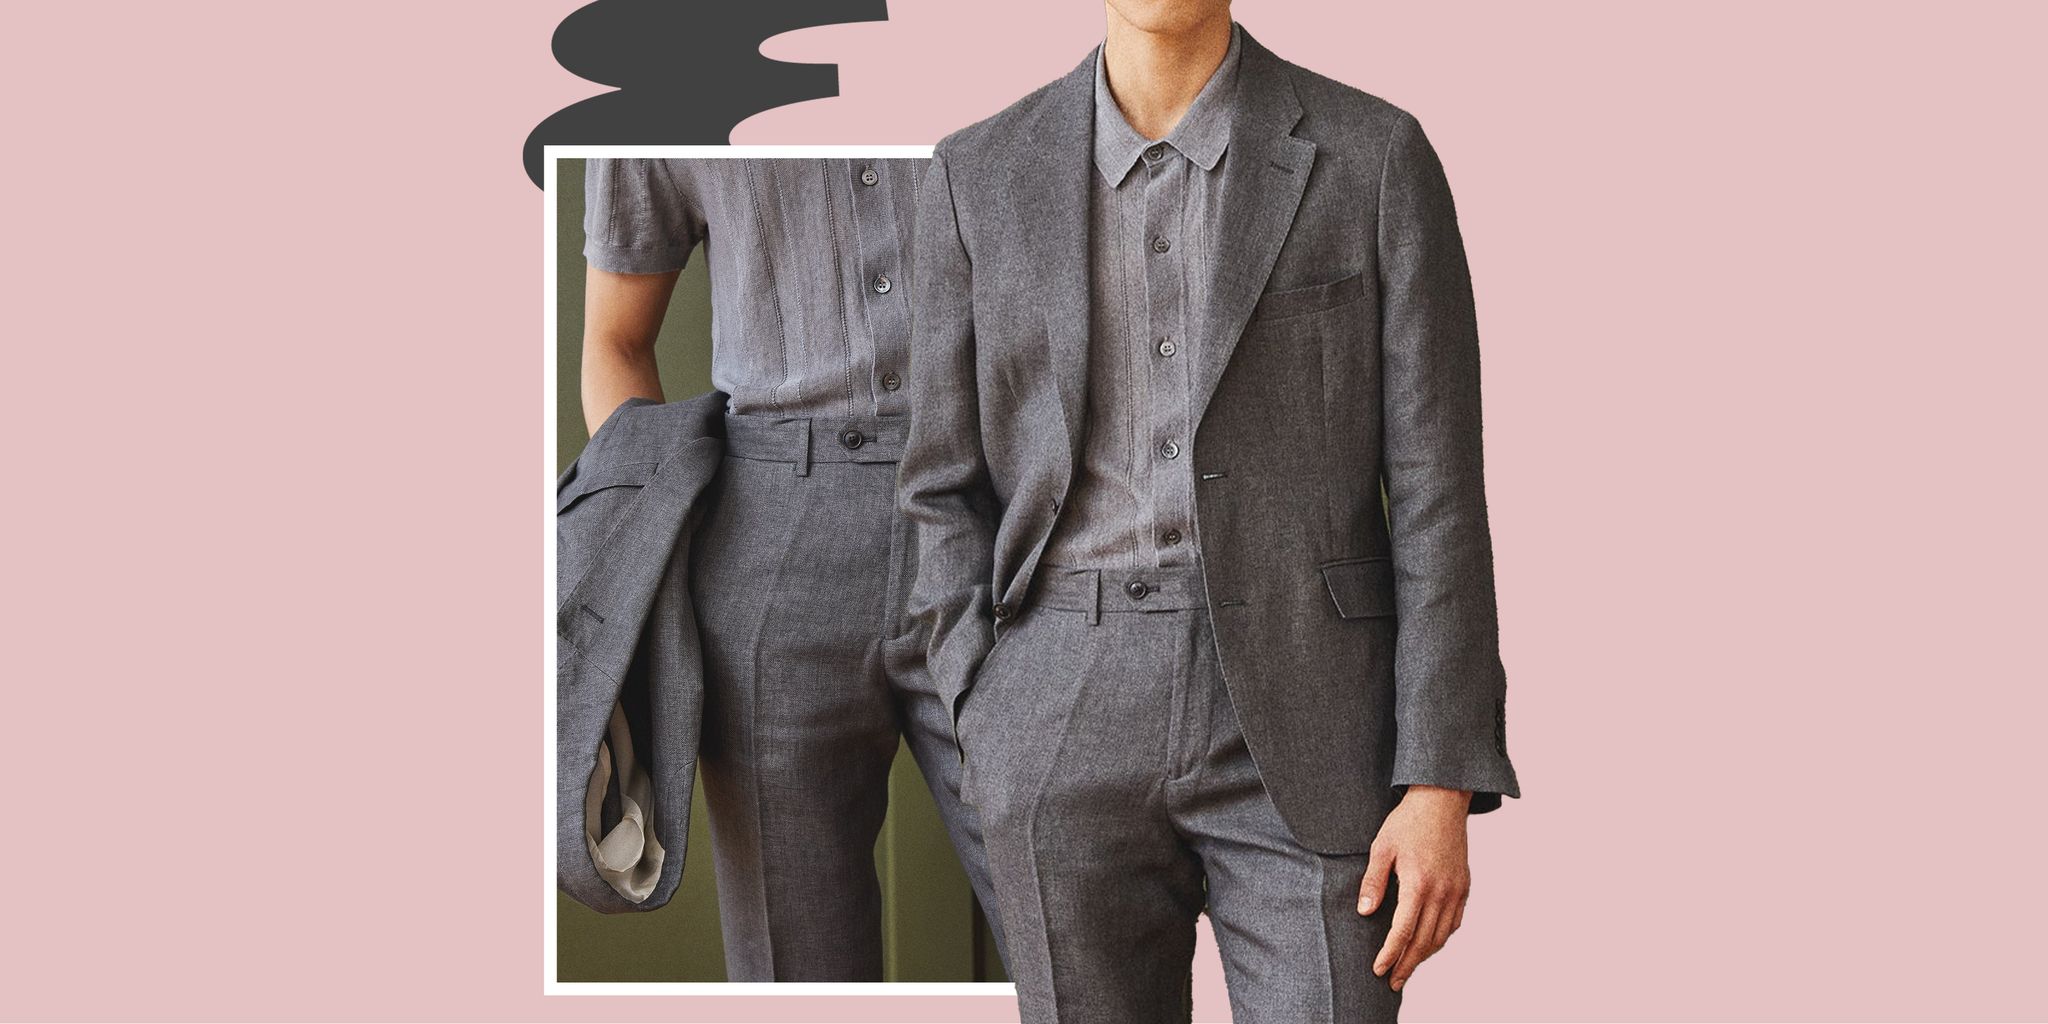 Beige Linen Long Sleeve Shirt Outfits For Men (37 ideas & outfits)